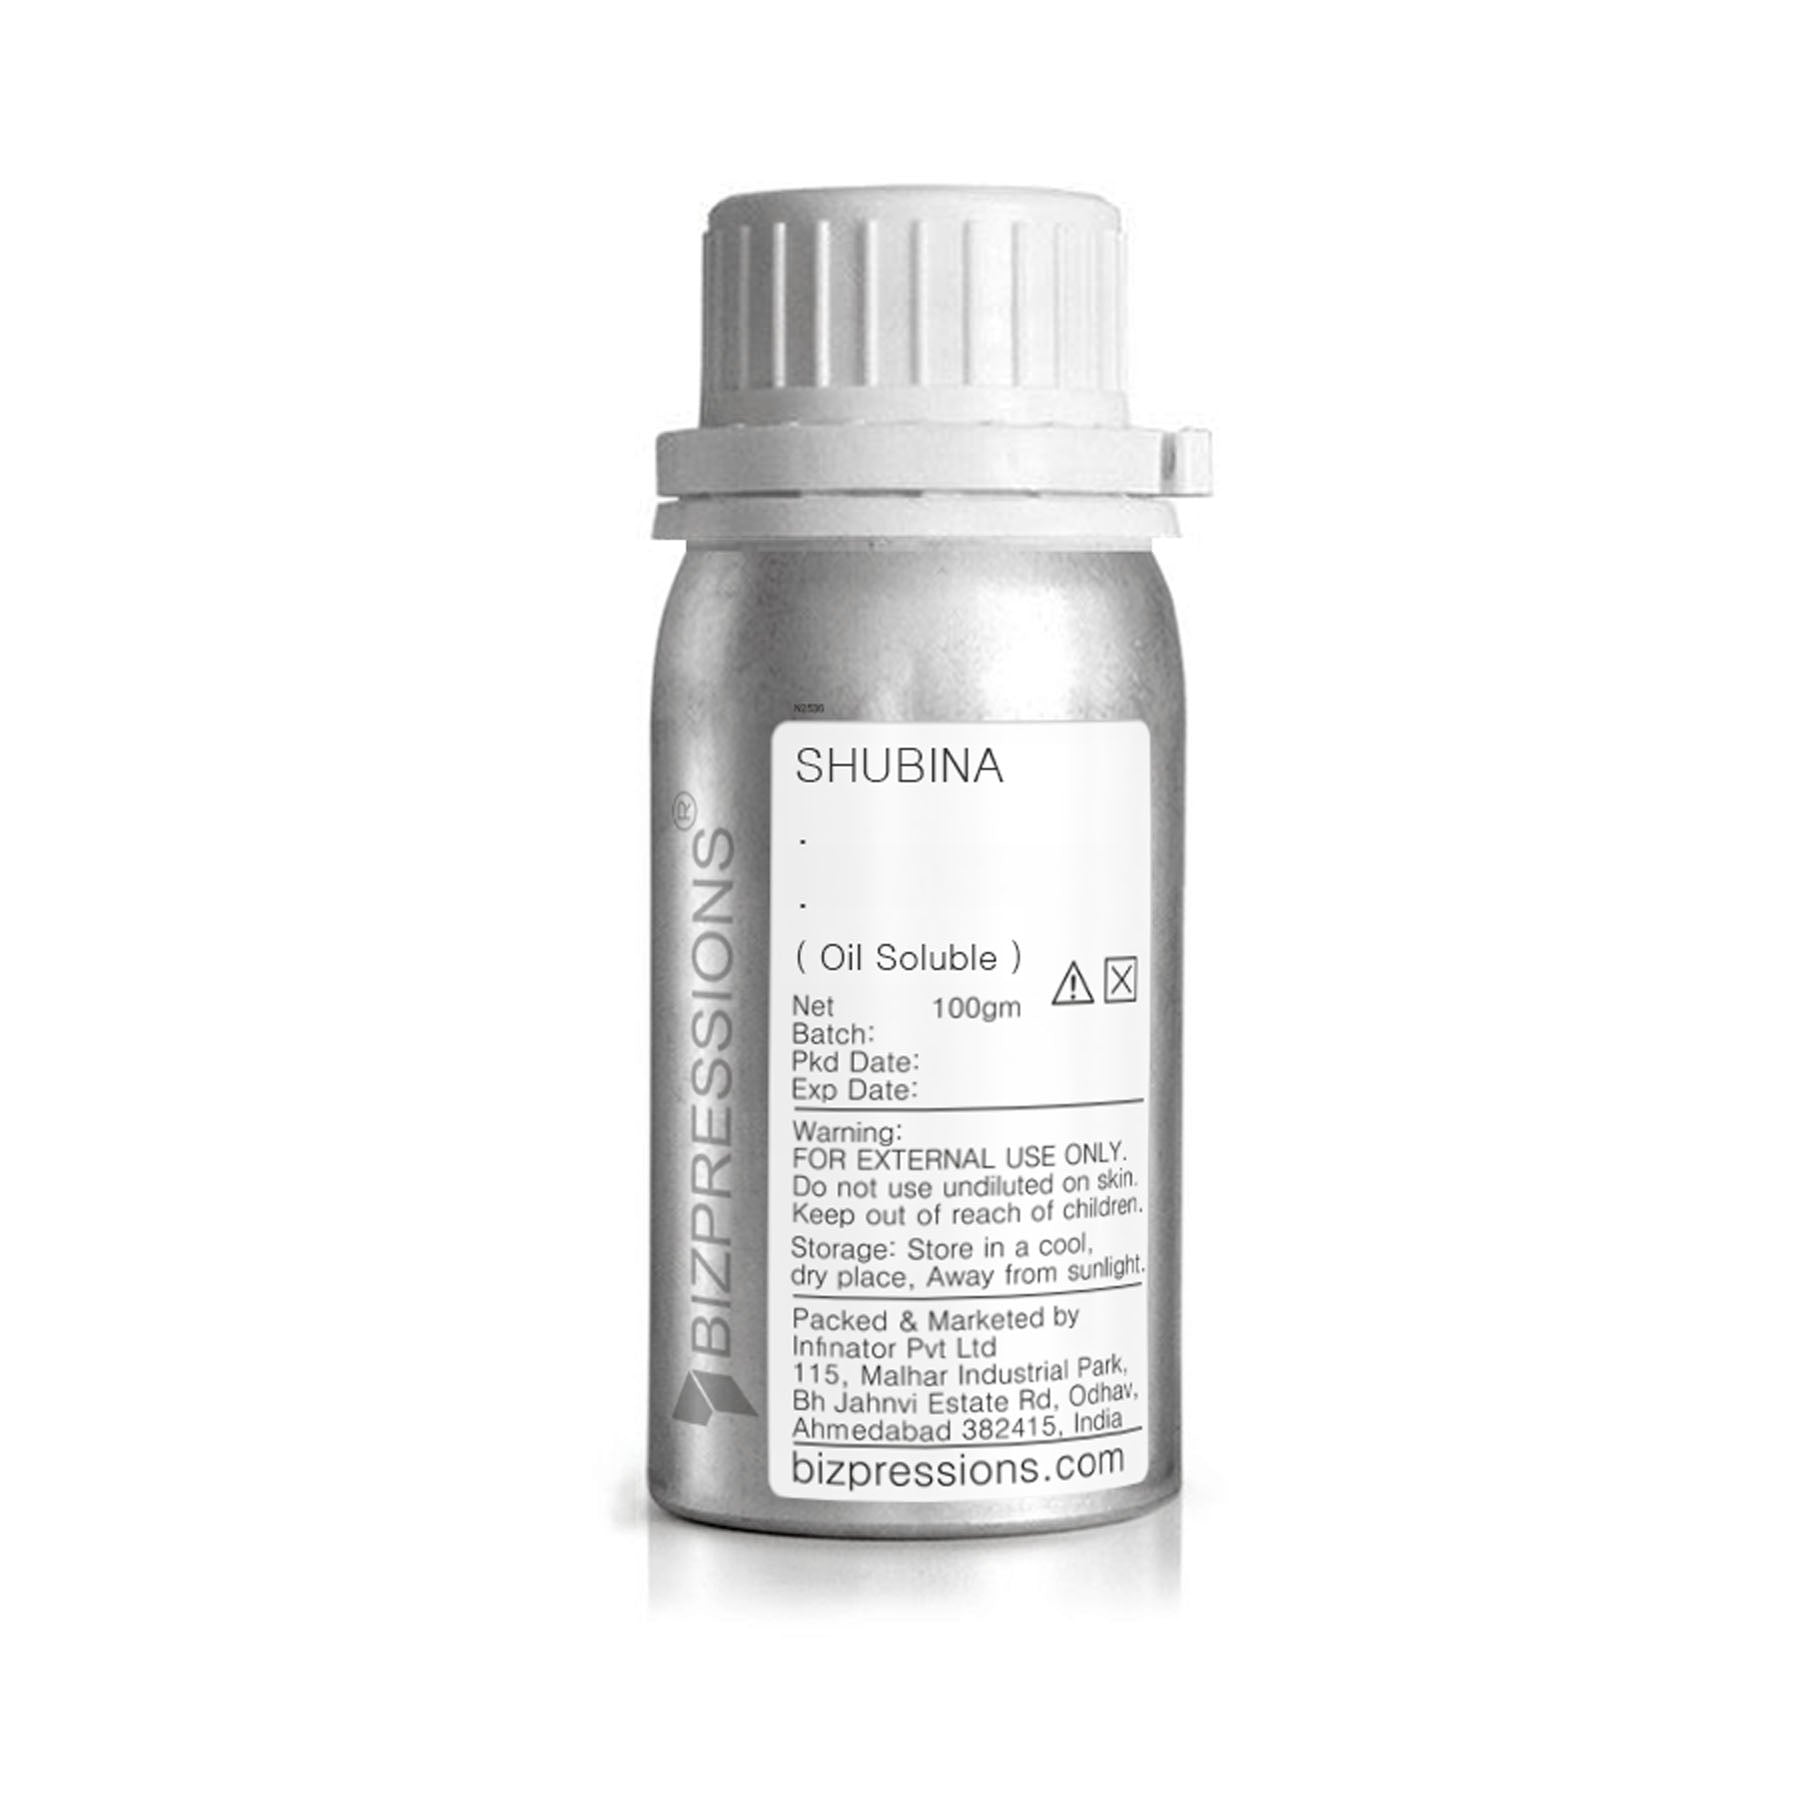 SHUBINA - Fragrance ( Oil Soluble ) - 100 gm